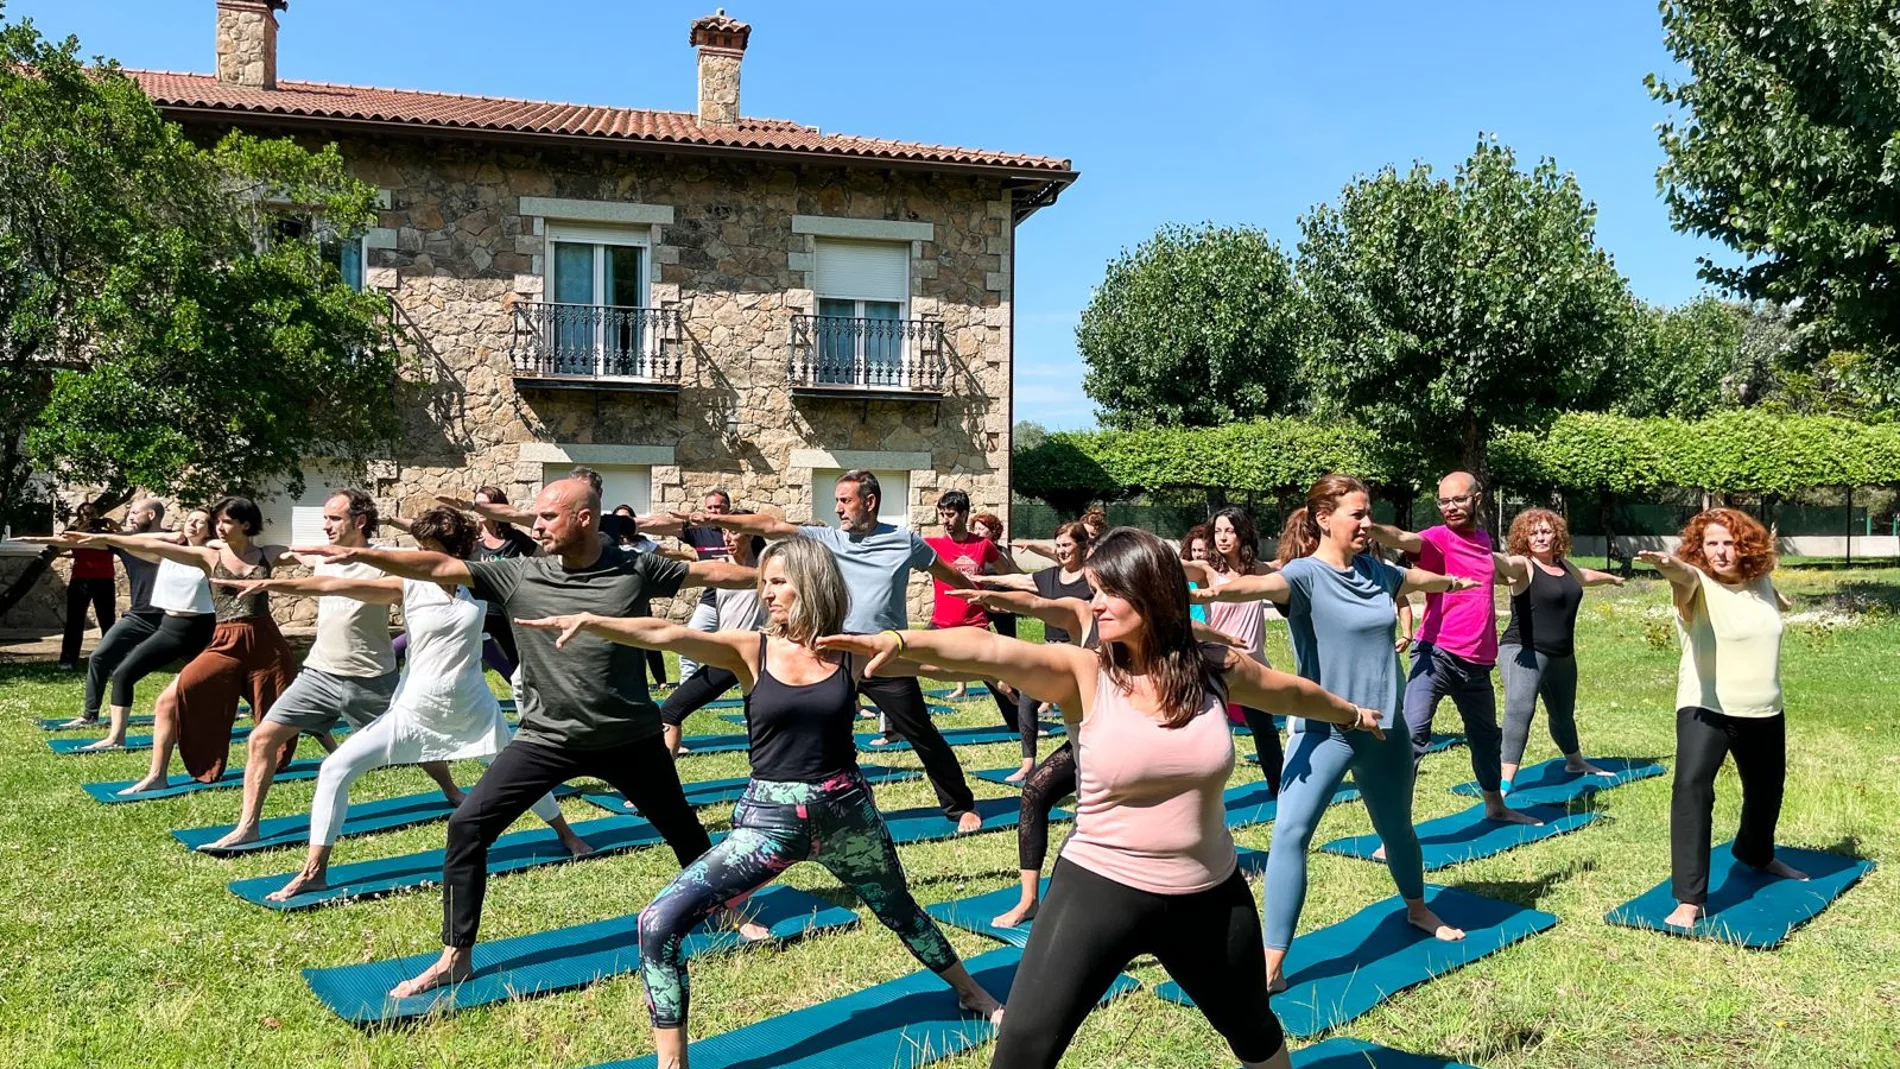 Se puede practicar yoga, mindfulness o biodanza